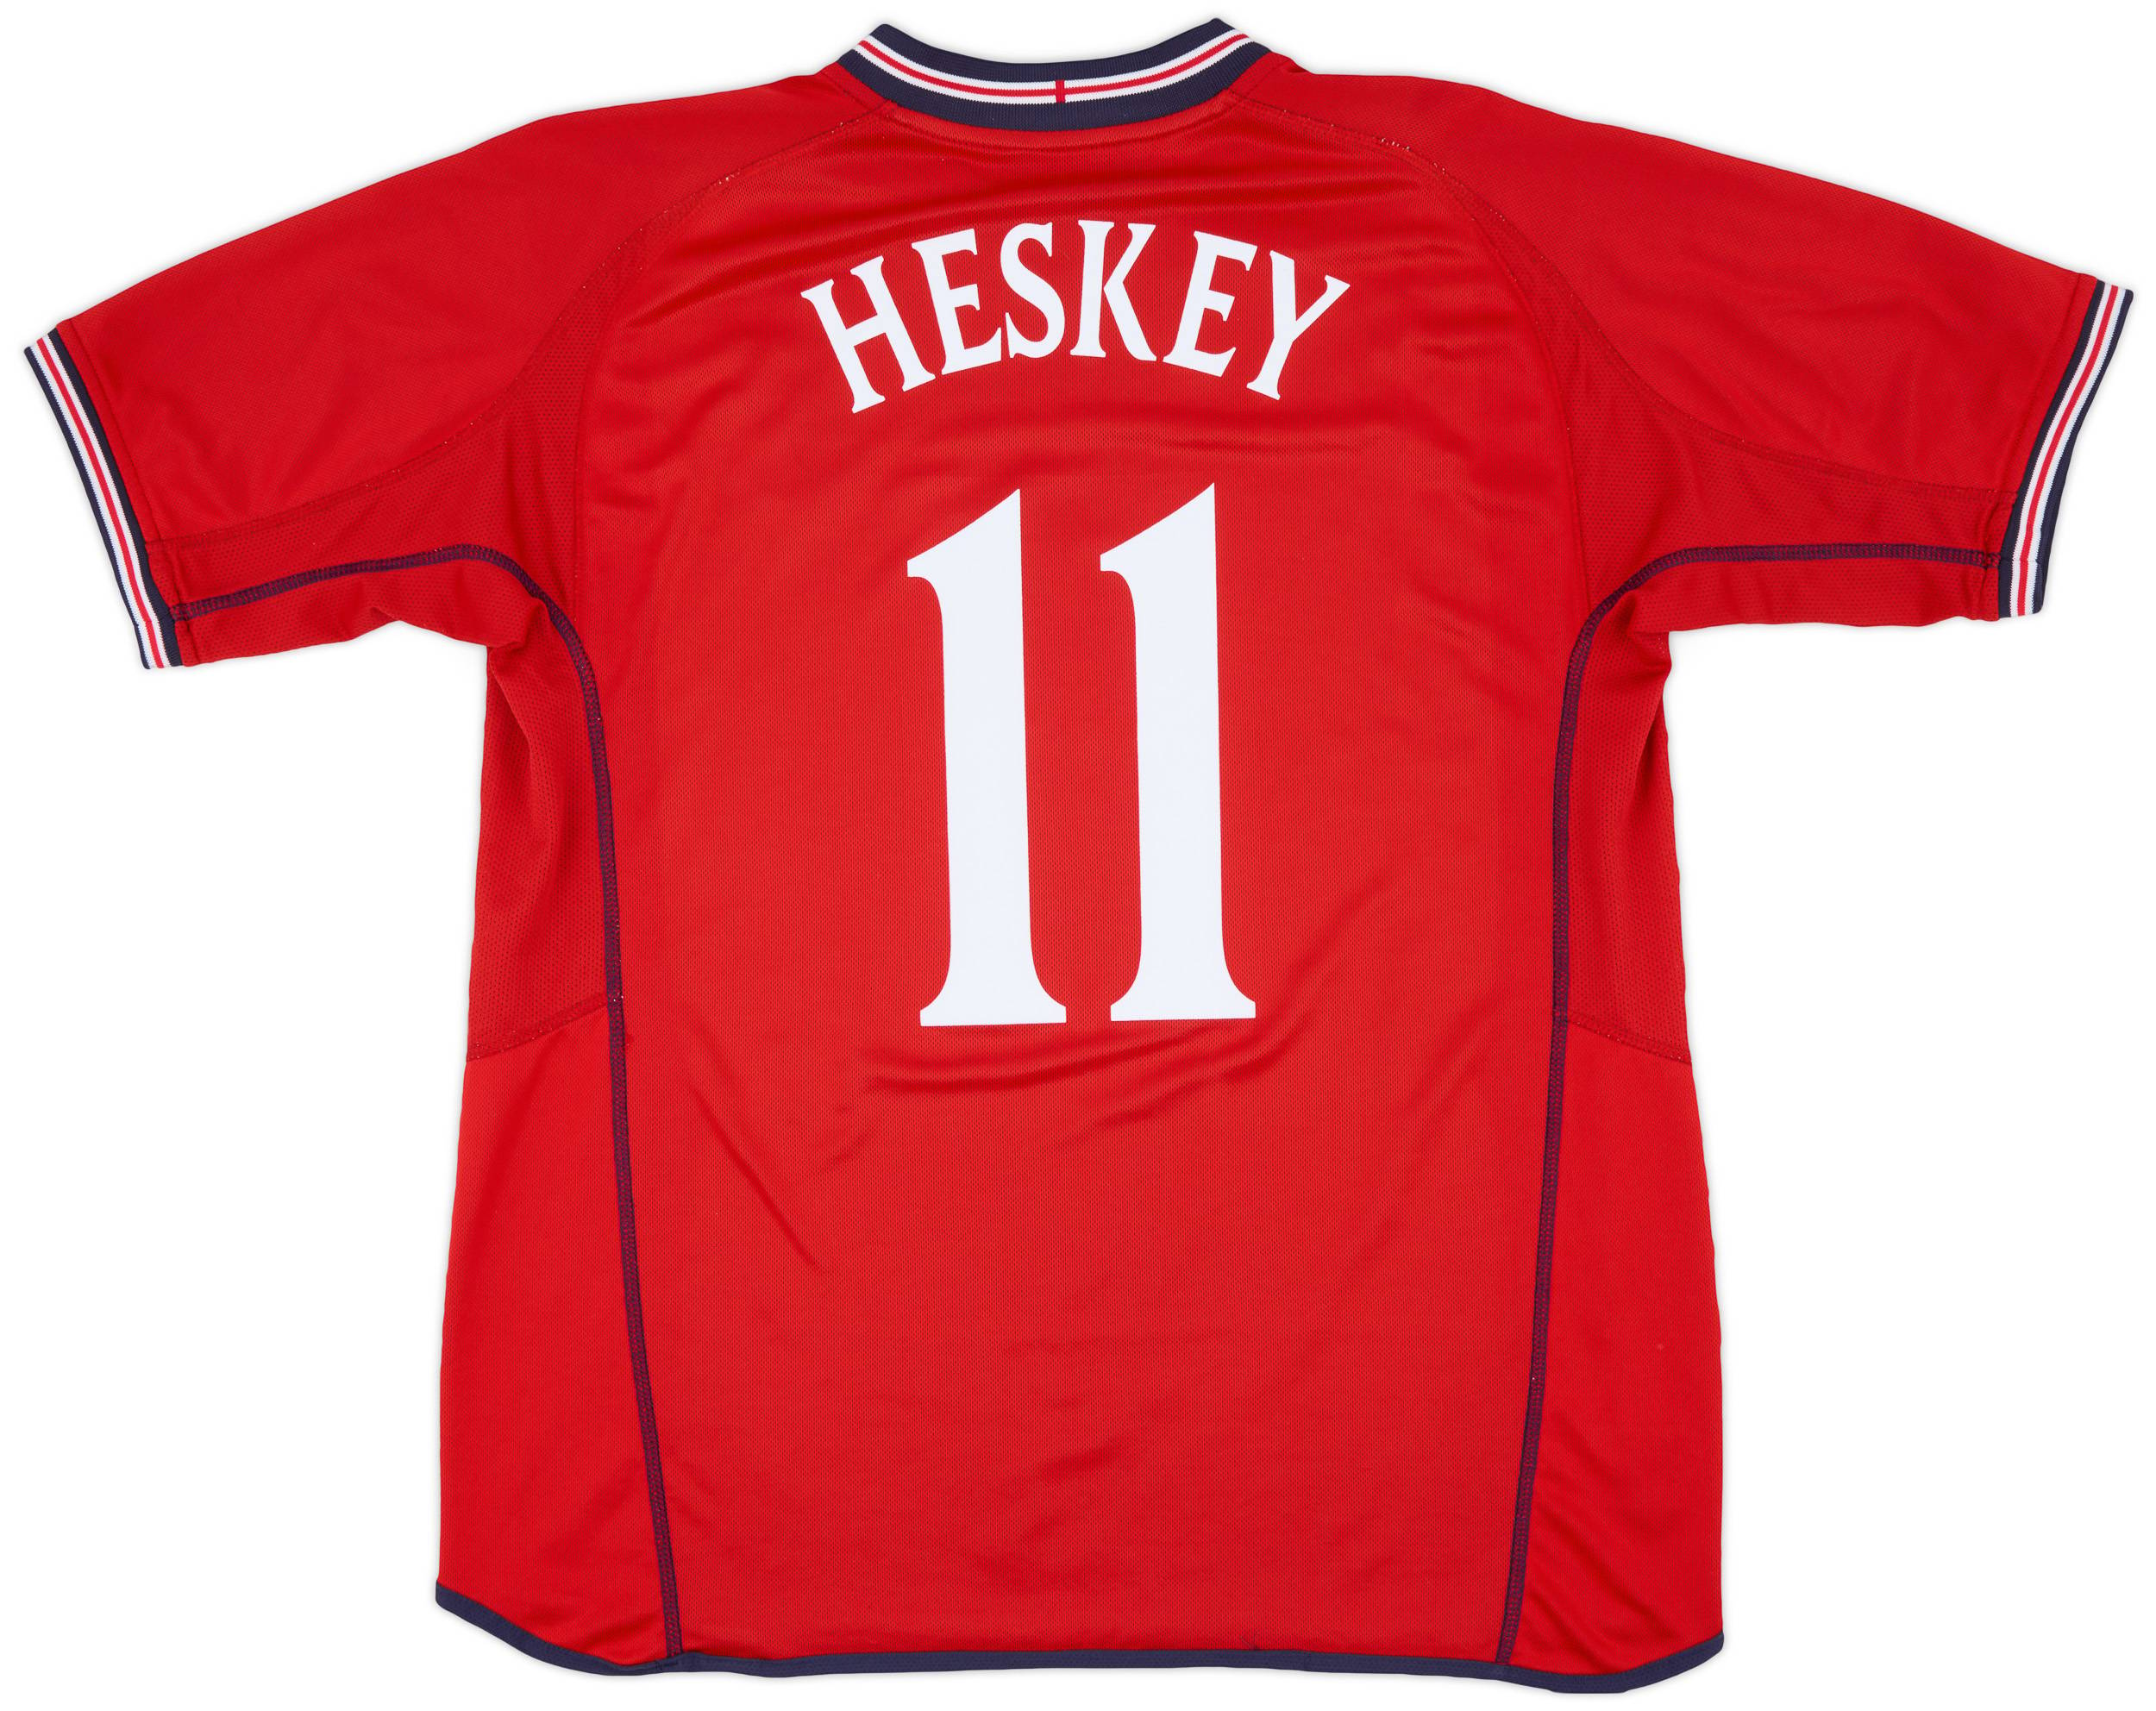 2002-04 England Away Shirt Heskey #11 - 9/10 - (XL)